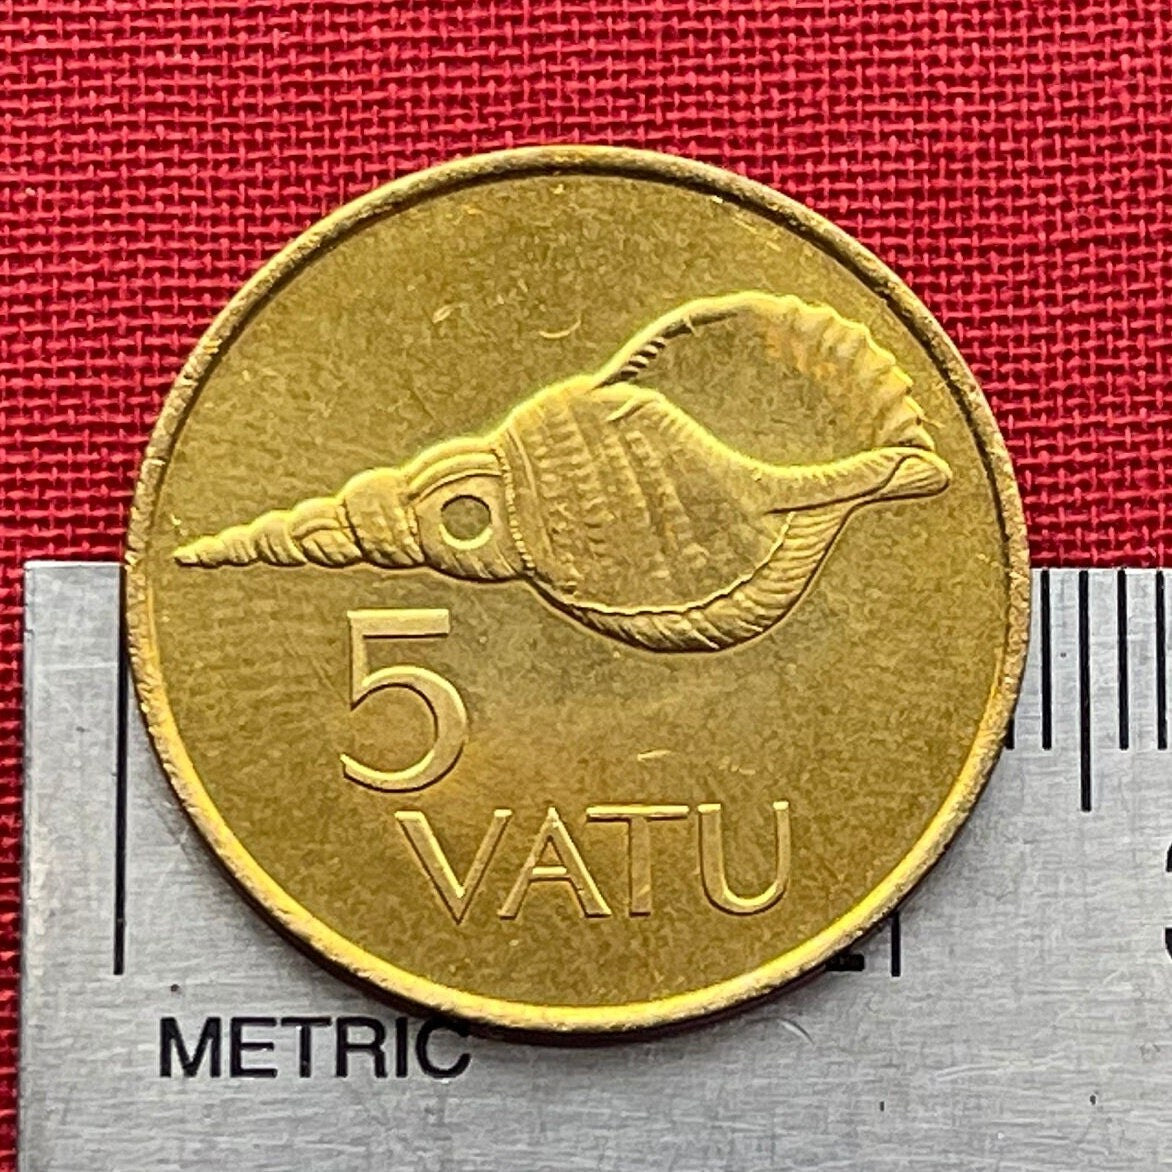 Triton Shell Trumpet (Large) 5 Vatu Vanuatu Authentic Coin Money for Jewelry and Craft Making (Horagai) (Sangu) (Pūtātara)